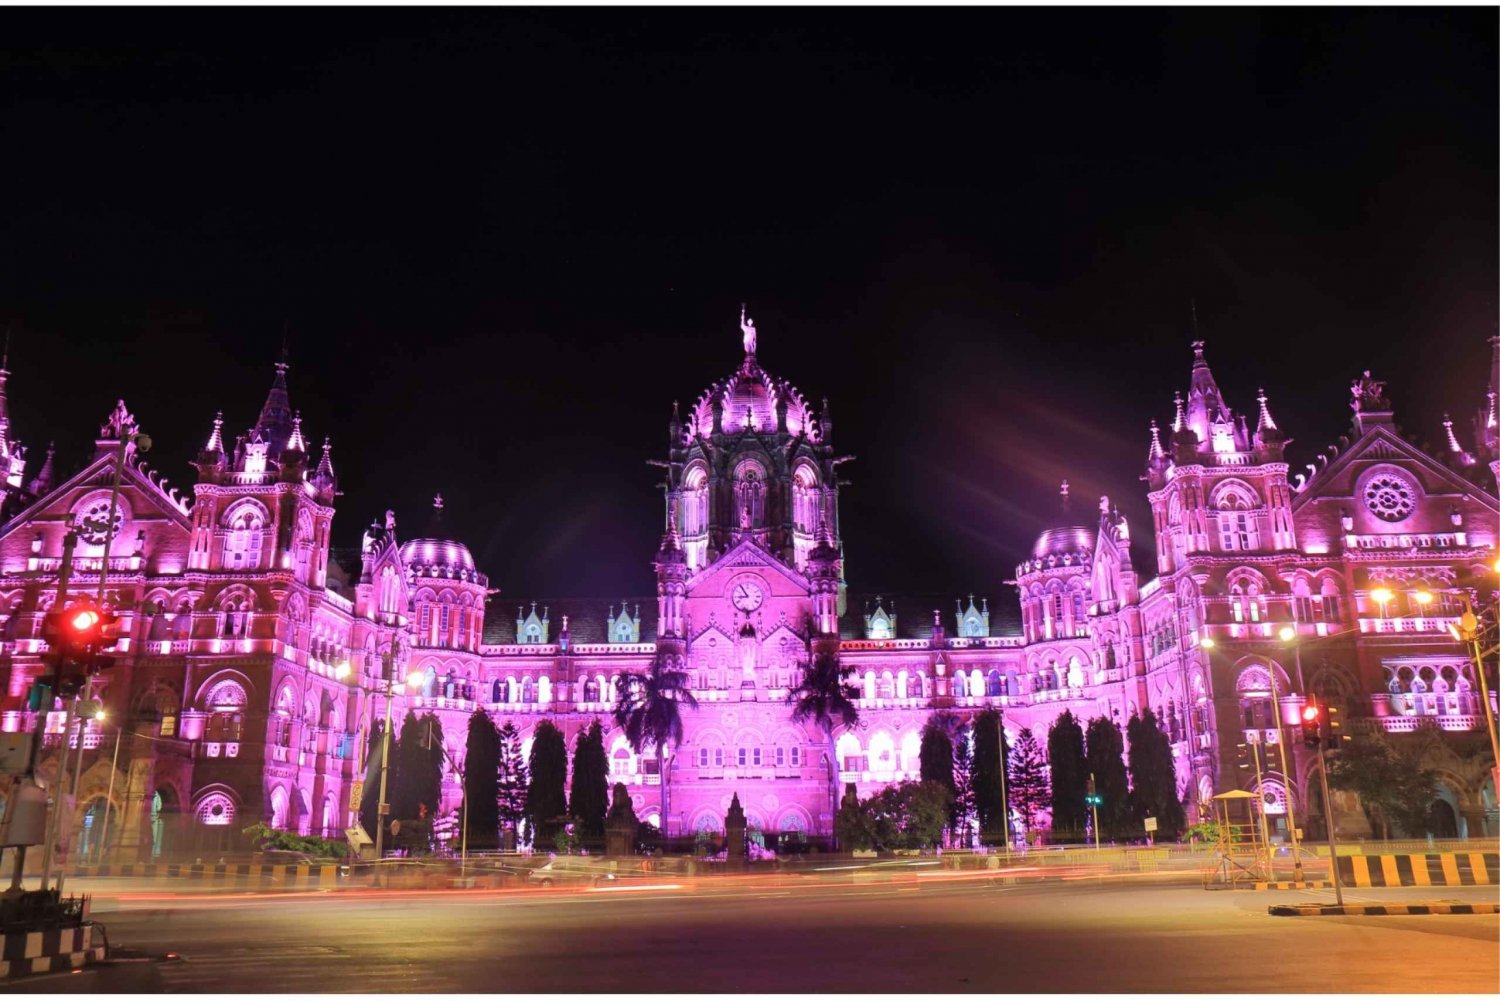 Mumbai nattvandring (2 timers guidet tur)